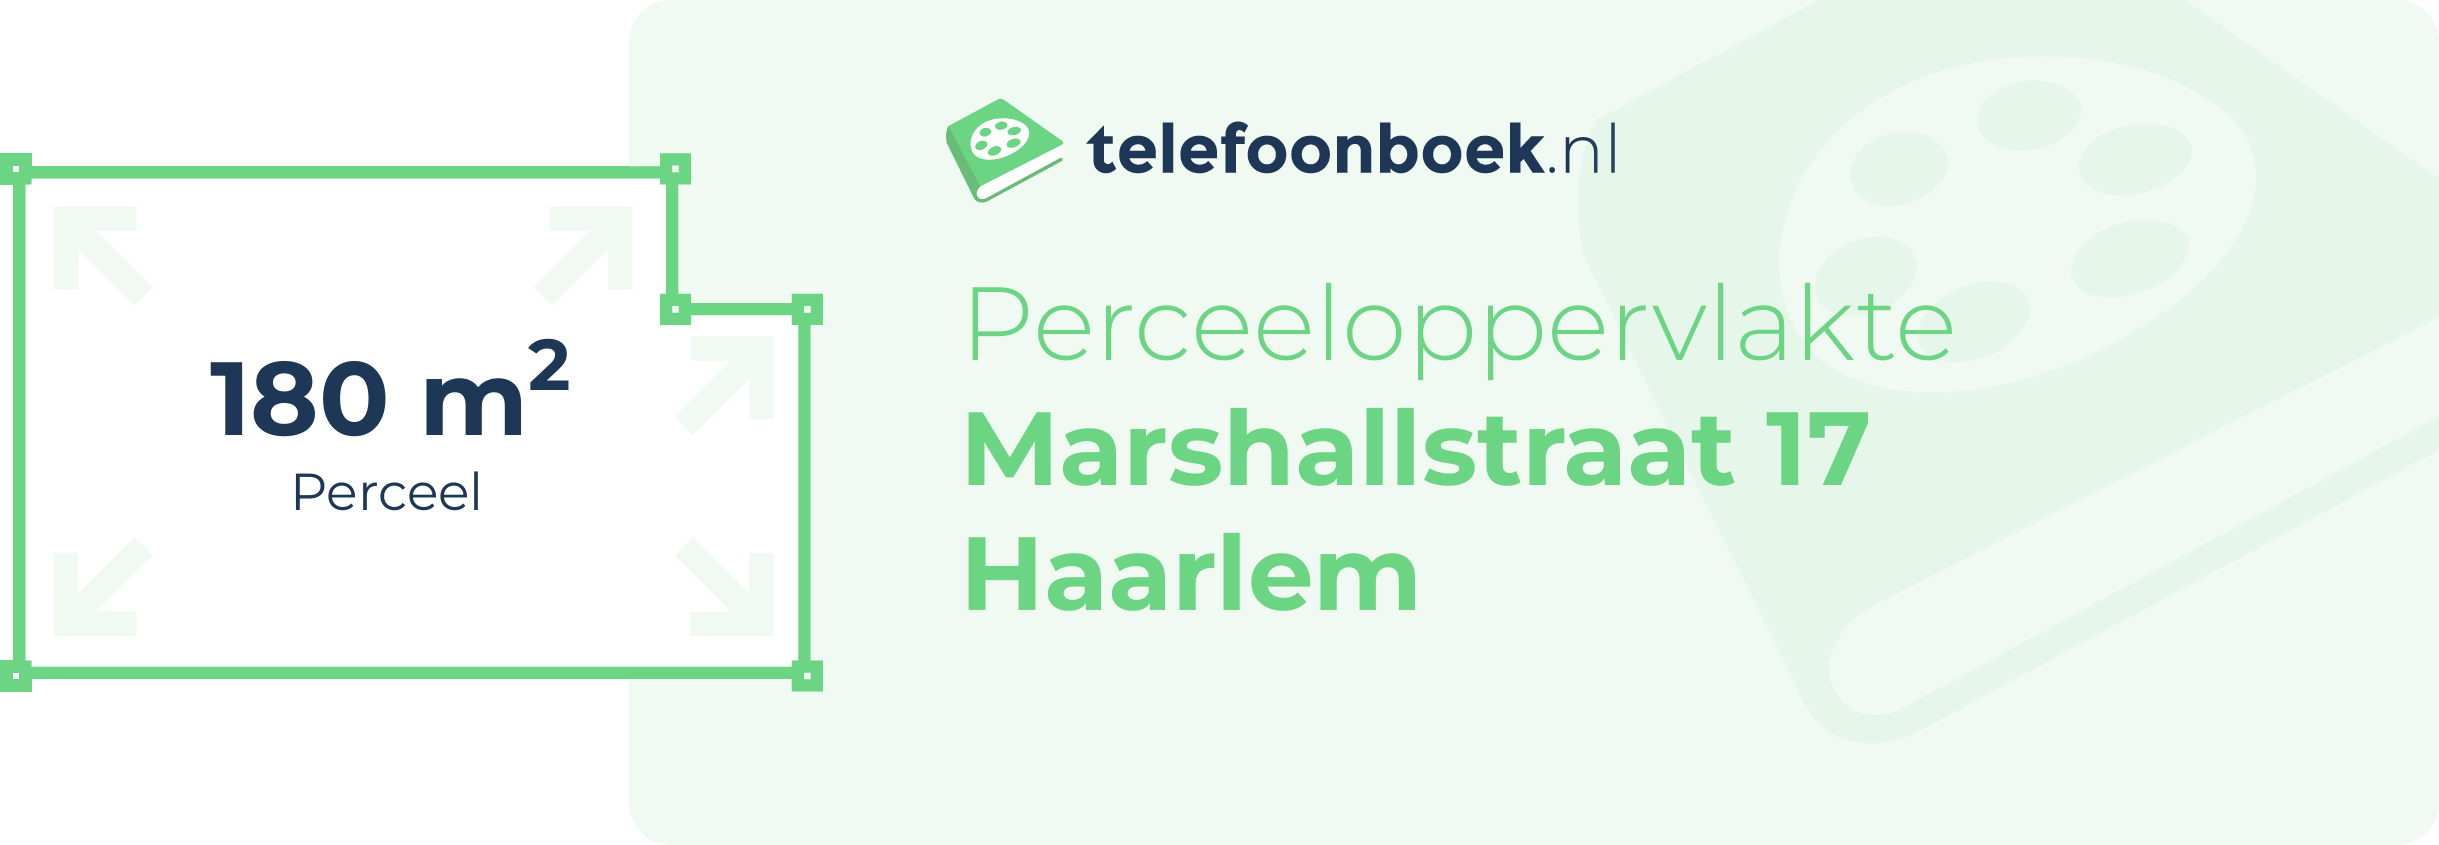 Perceeloppervlakte Marshallstraat 17 Haarlem